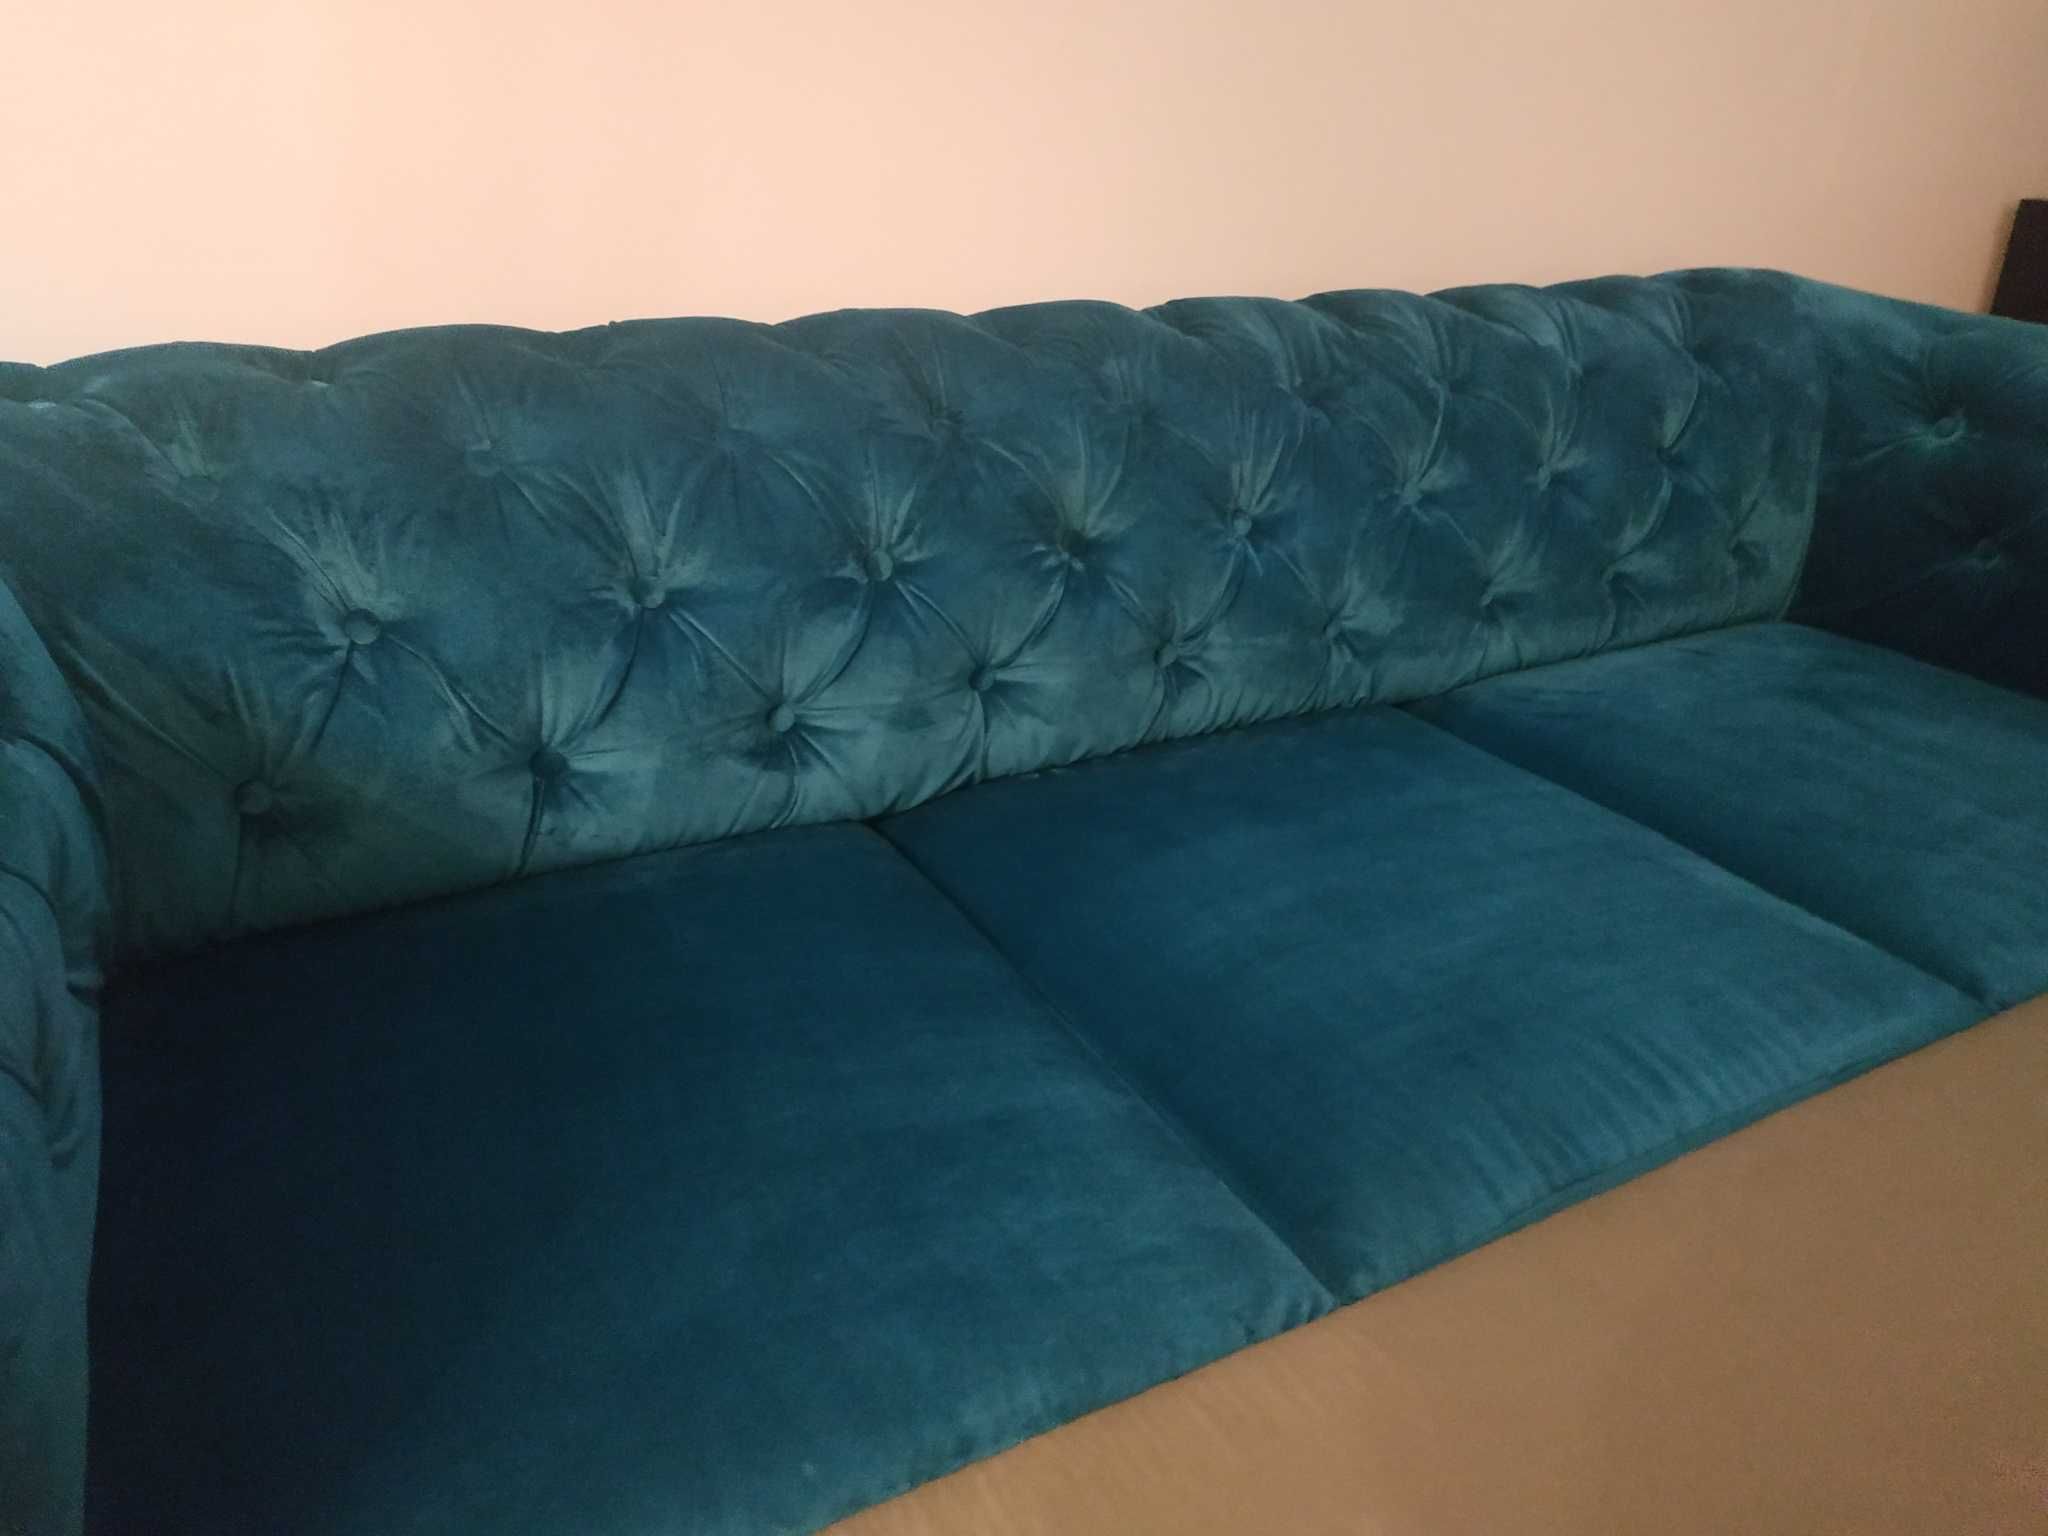 CHESTERFIELD turkusowa sofa morska piękna rozkładana kanapa welurowa